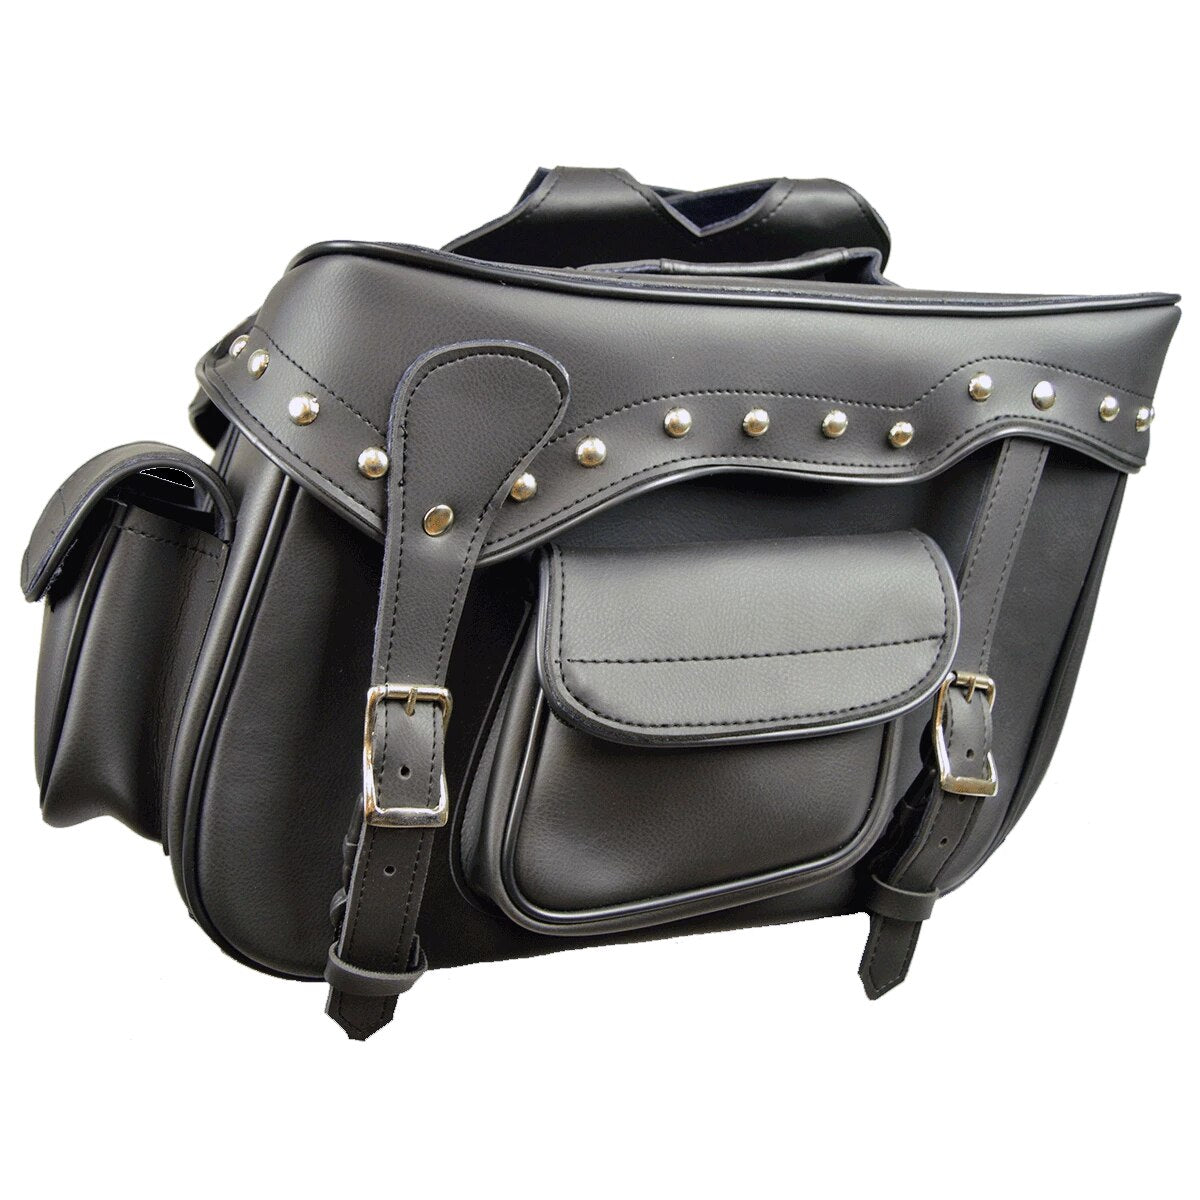 Vance Leather Black Studded Saddle Bag with 2 Outside Pockets